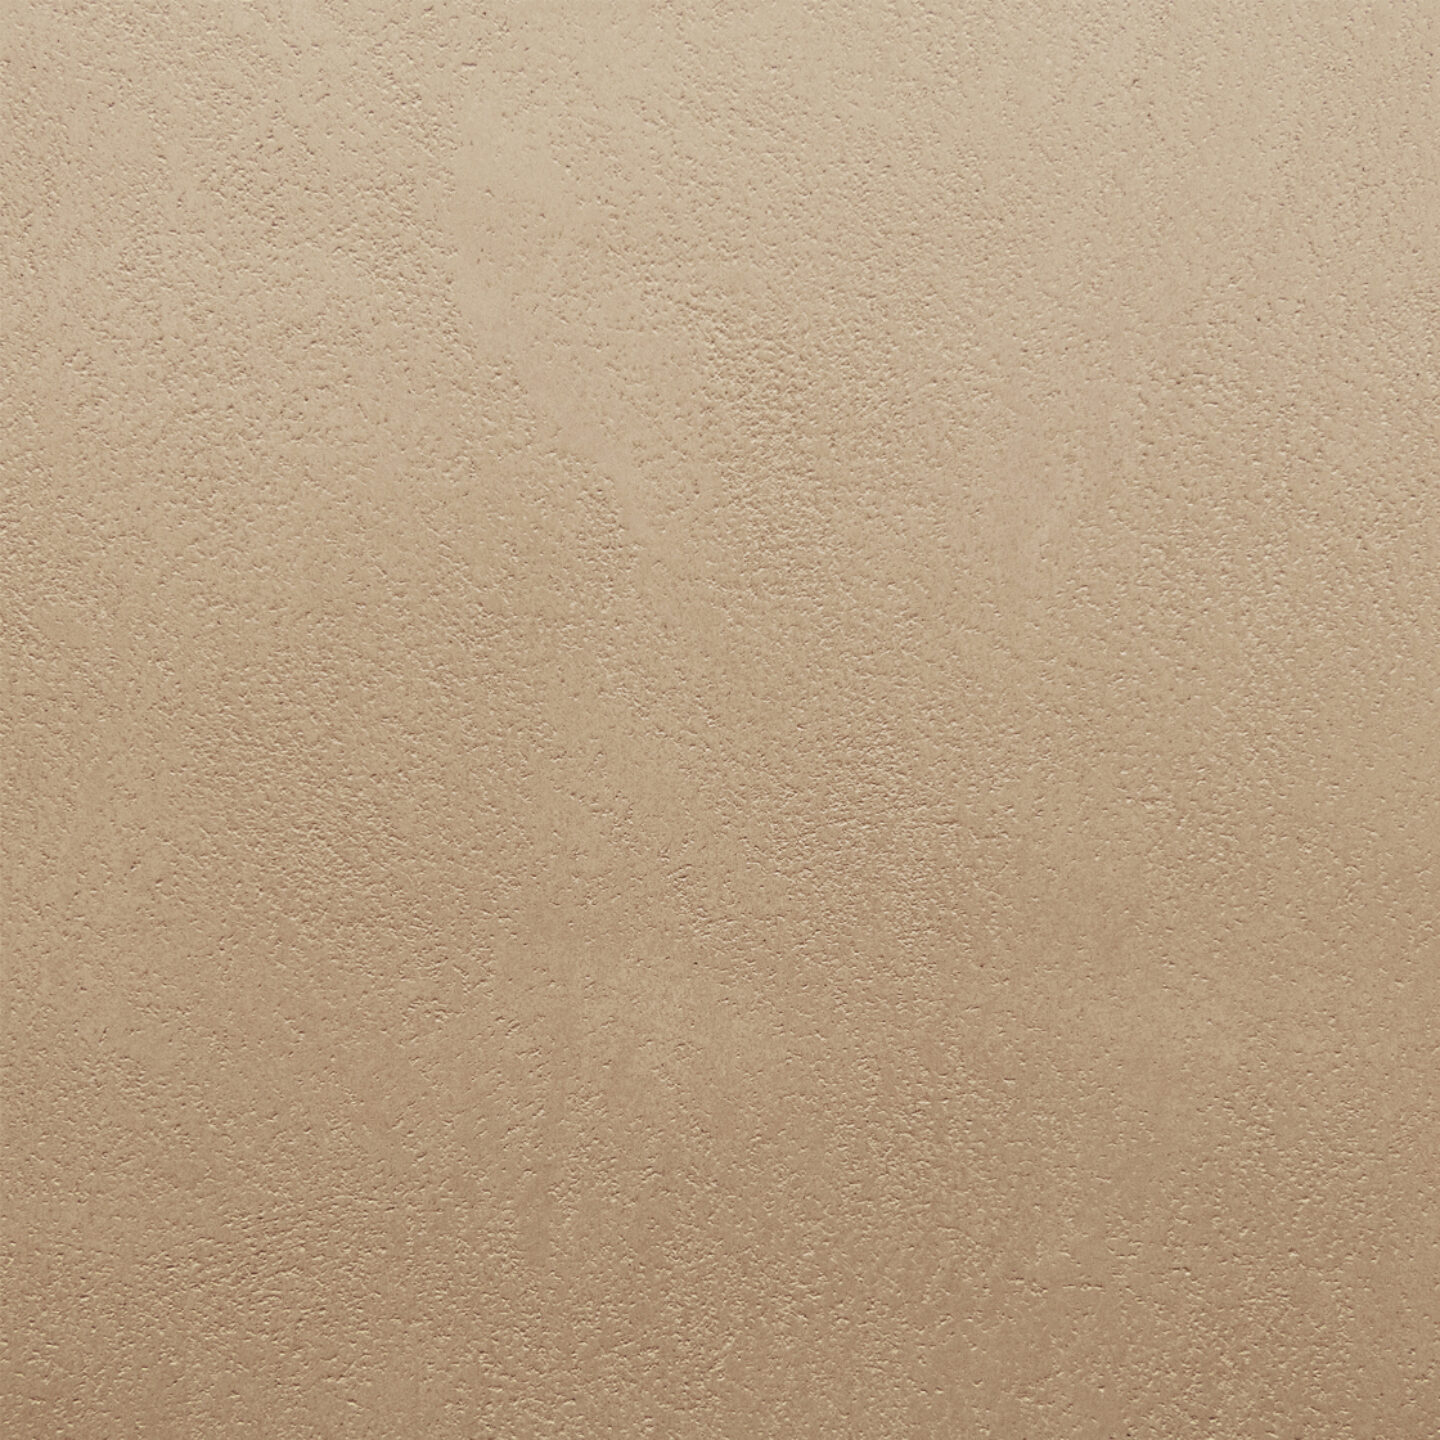 Close up of Armourcoat leatherstone exterior polished plaster finish - 56